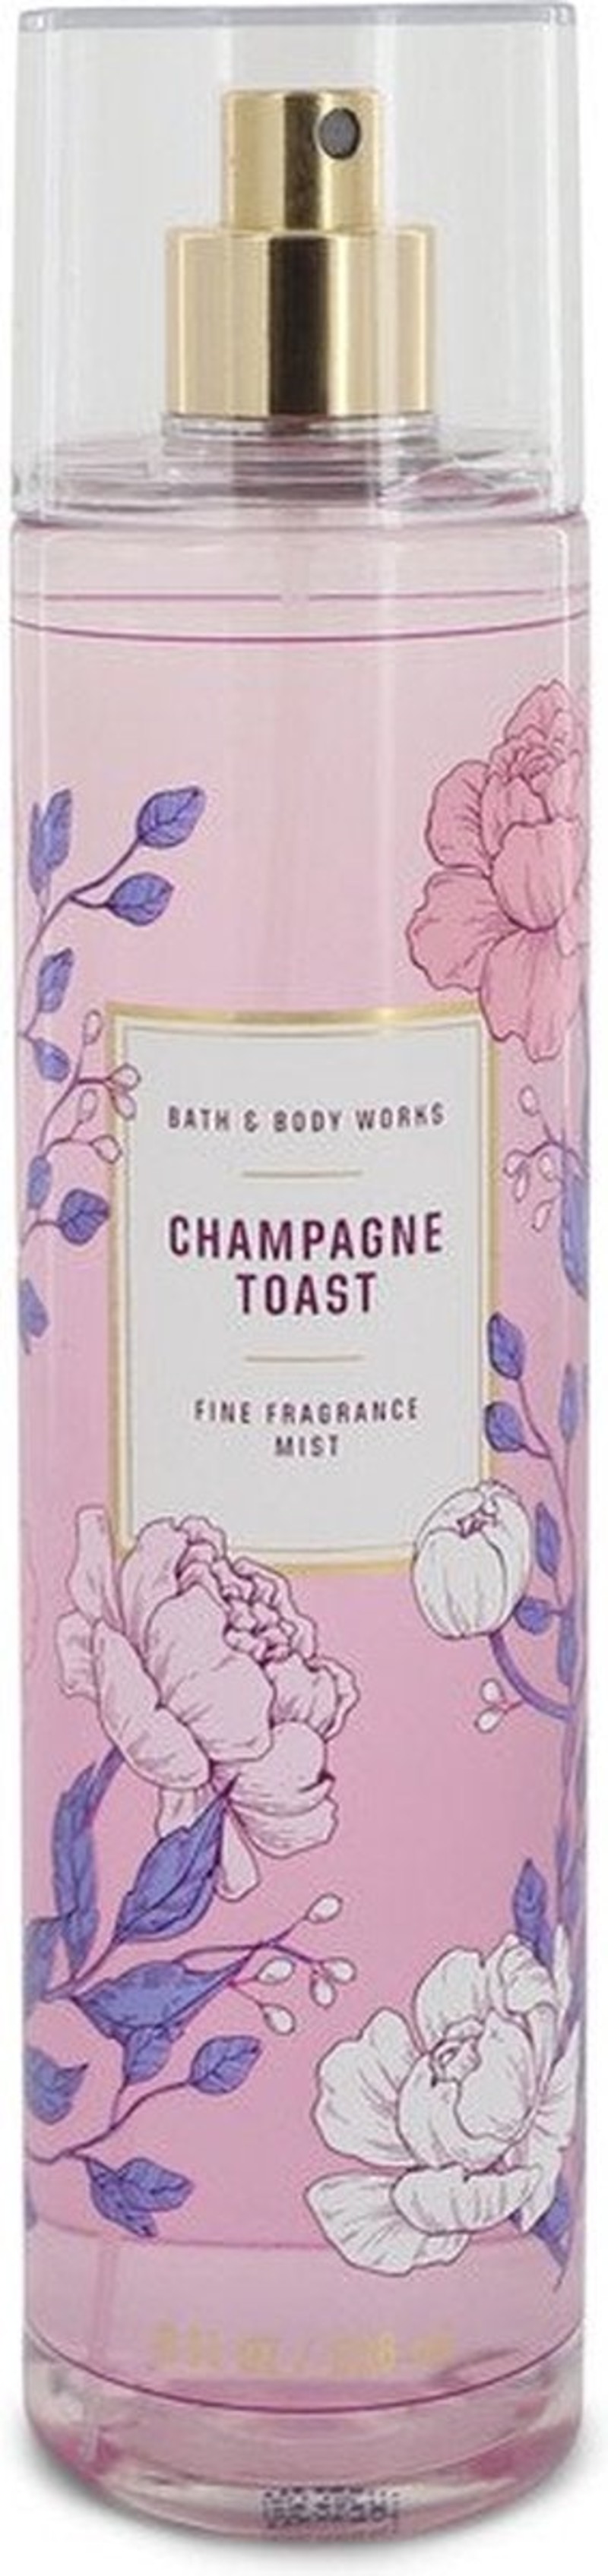 Champagne Toast Fine Fragrance Mist